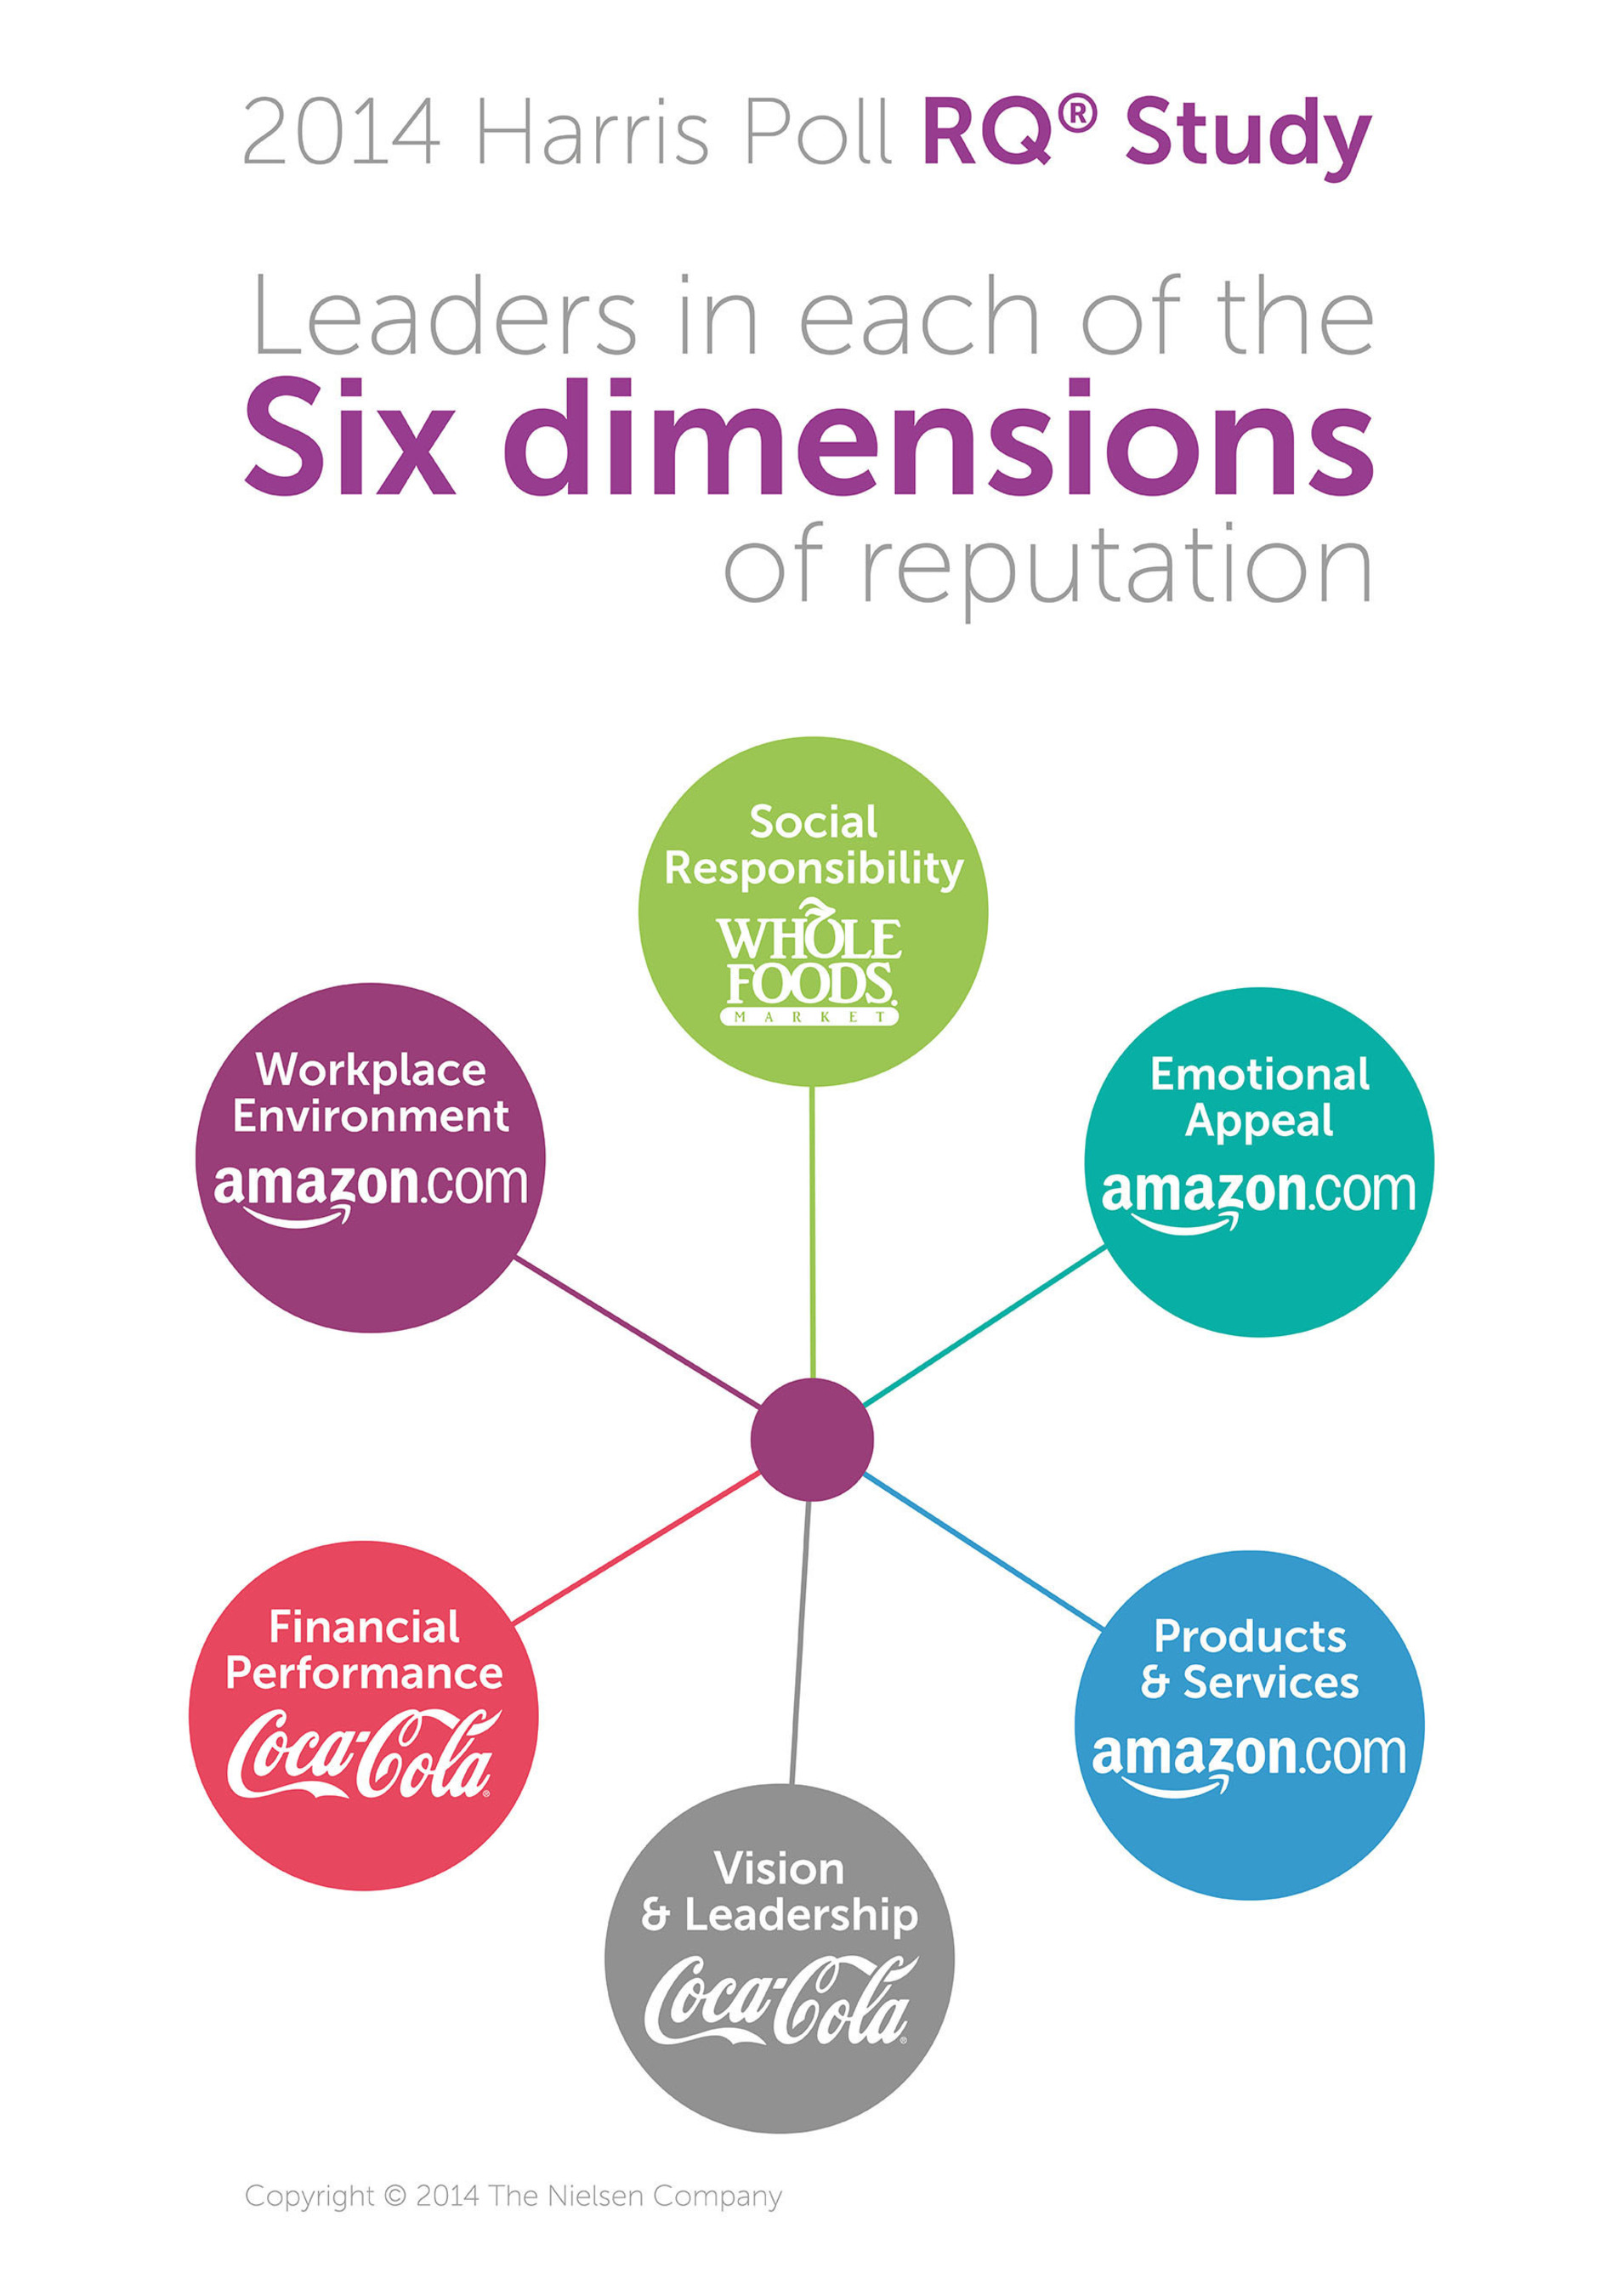 2014 Harris Poll RQ(R) Study: Leaders in Each of the Six Dimensions of Reputations. (PRNewsFoto/Harris Poll)